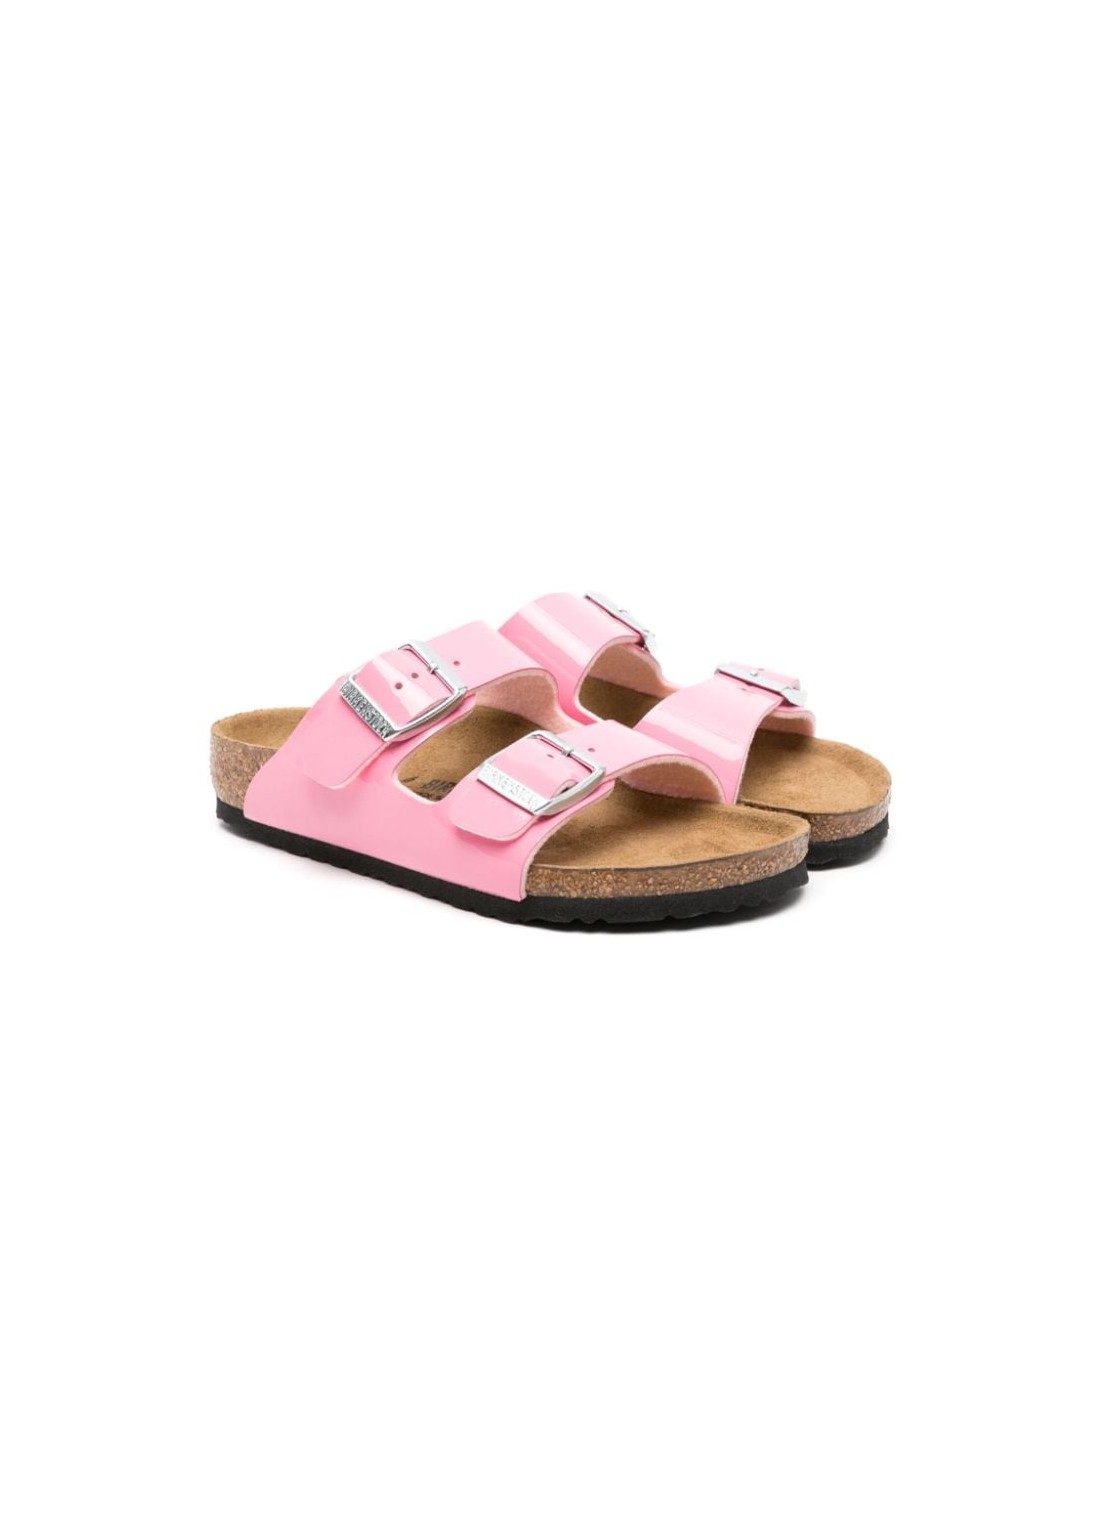 Sandalia birkenstock sandal manarizona kids bf - 1027133 patent candy pink talla 30
 